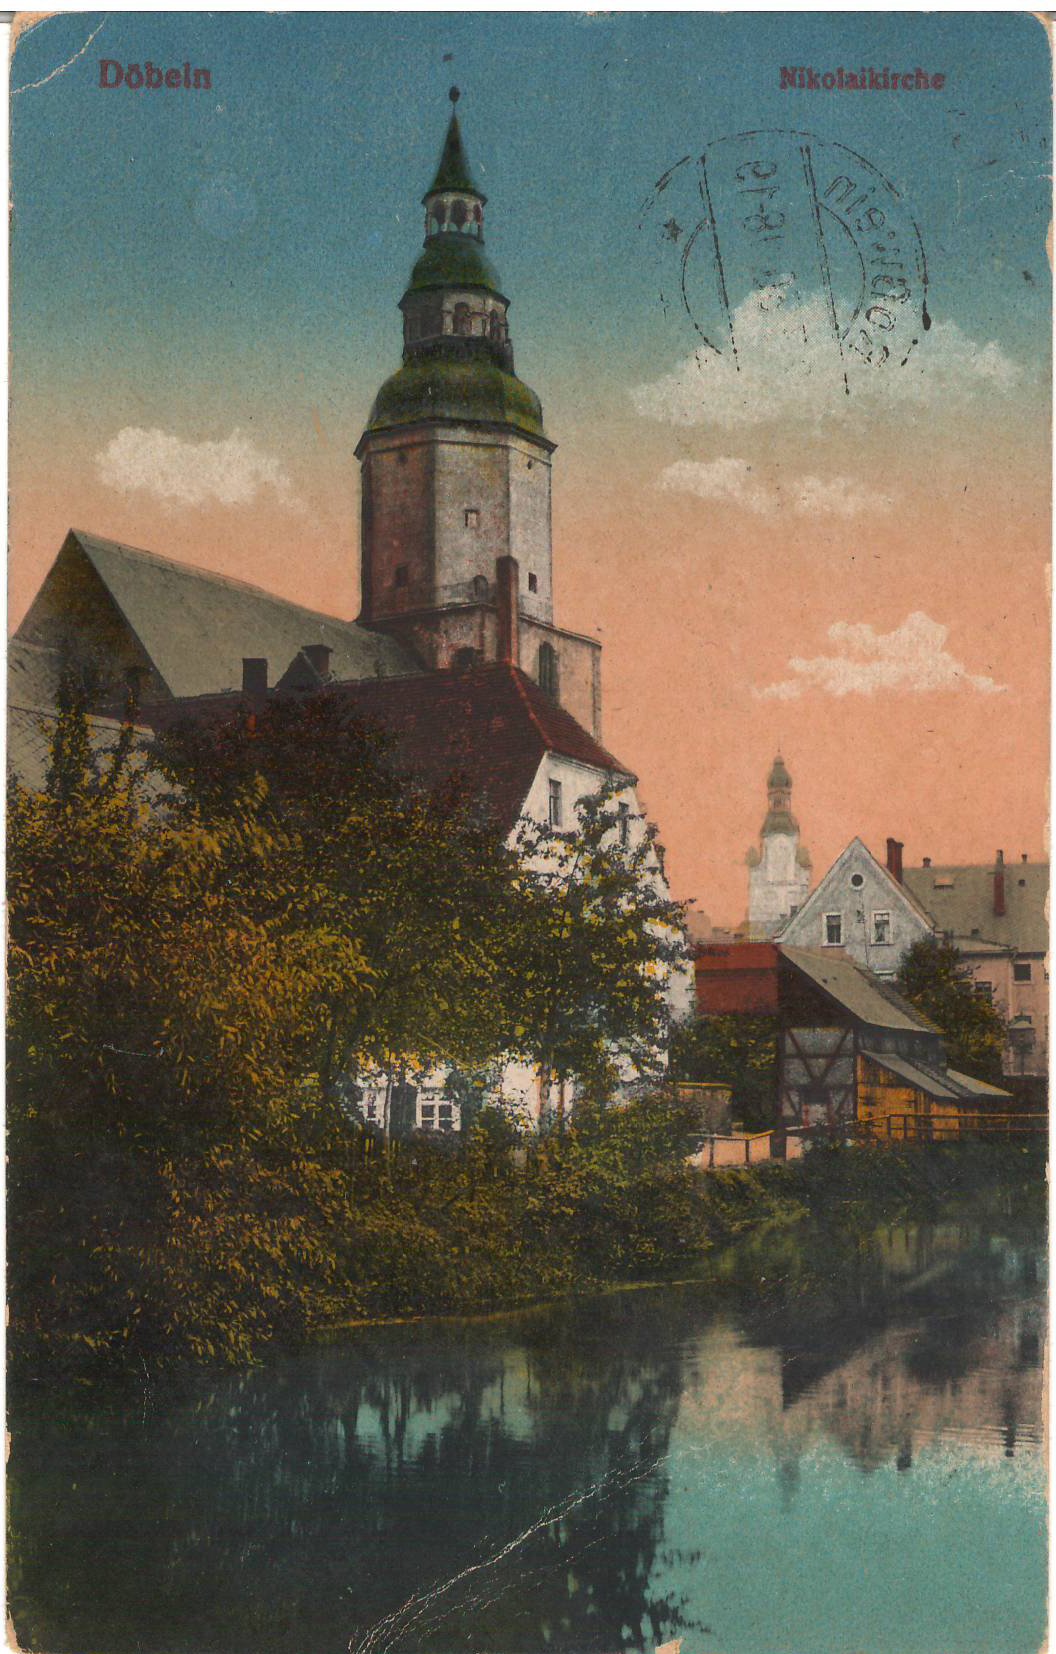 Ansichtspostkarte Döbeln: Nicolaikirche (Stadtmuseum / Kleine Galerie Döbeln CC BY-NC-SA)